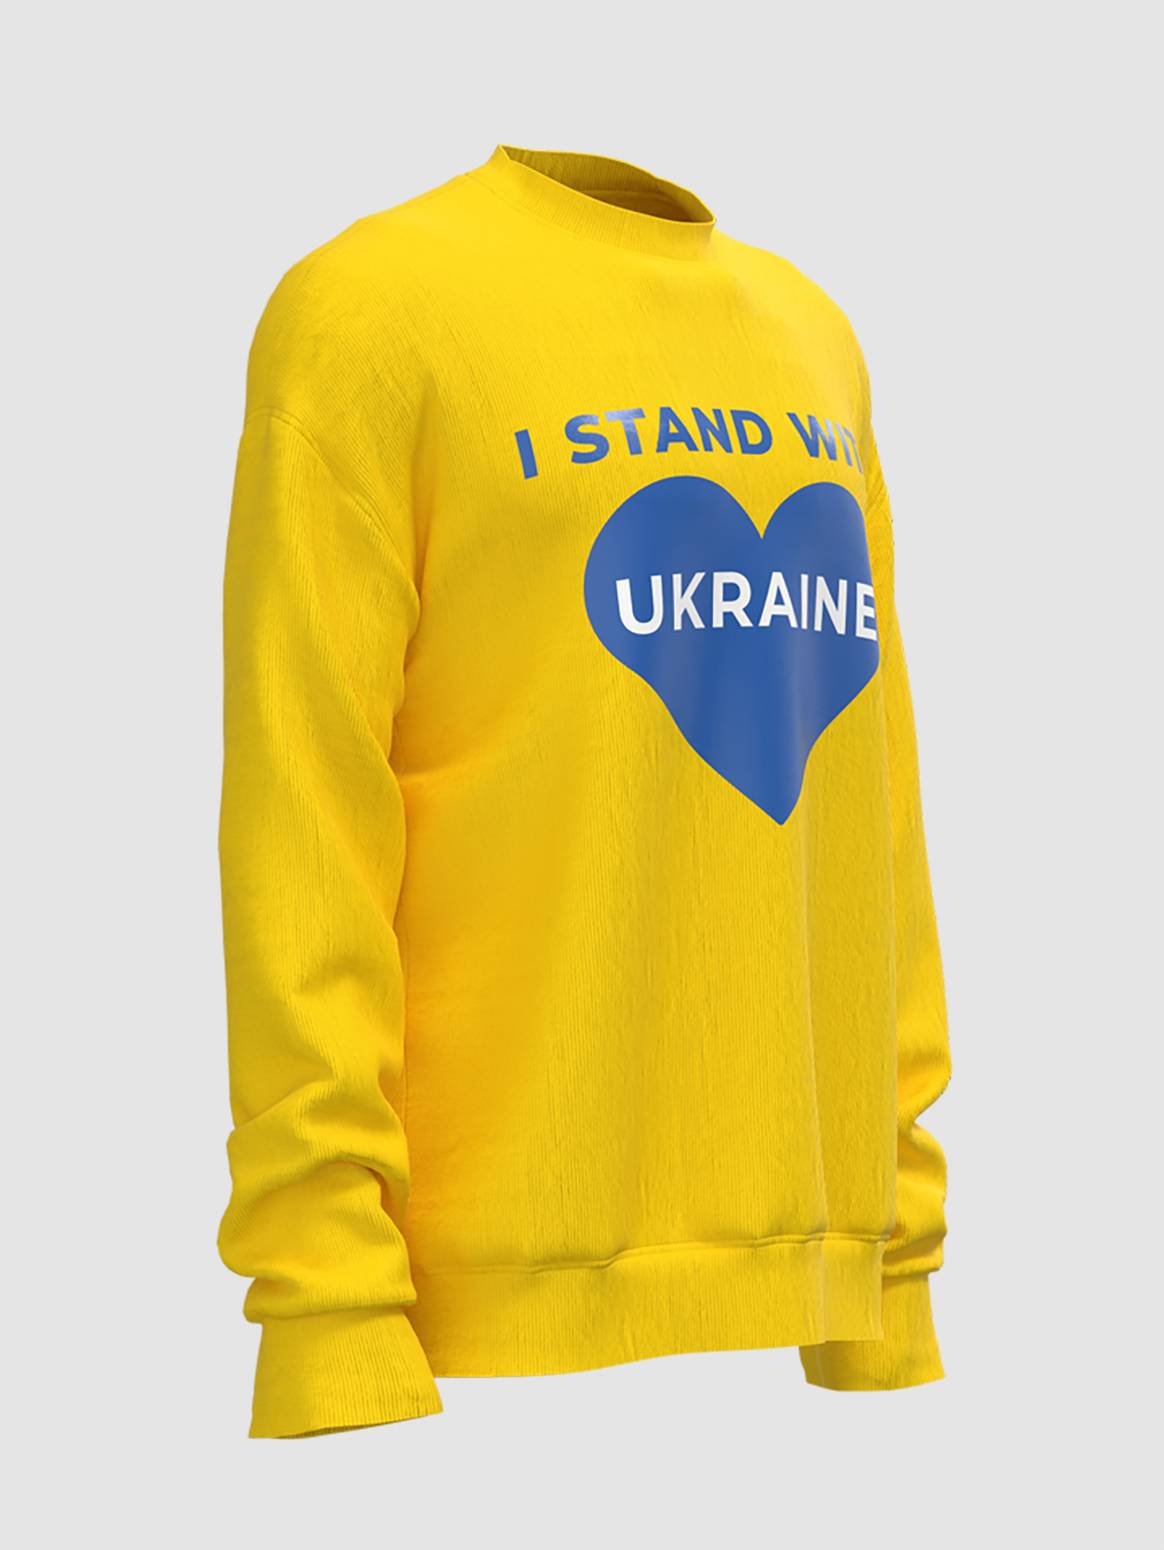 Photo Credits: Support Ukraine Collection, DressX.